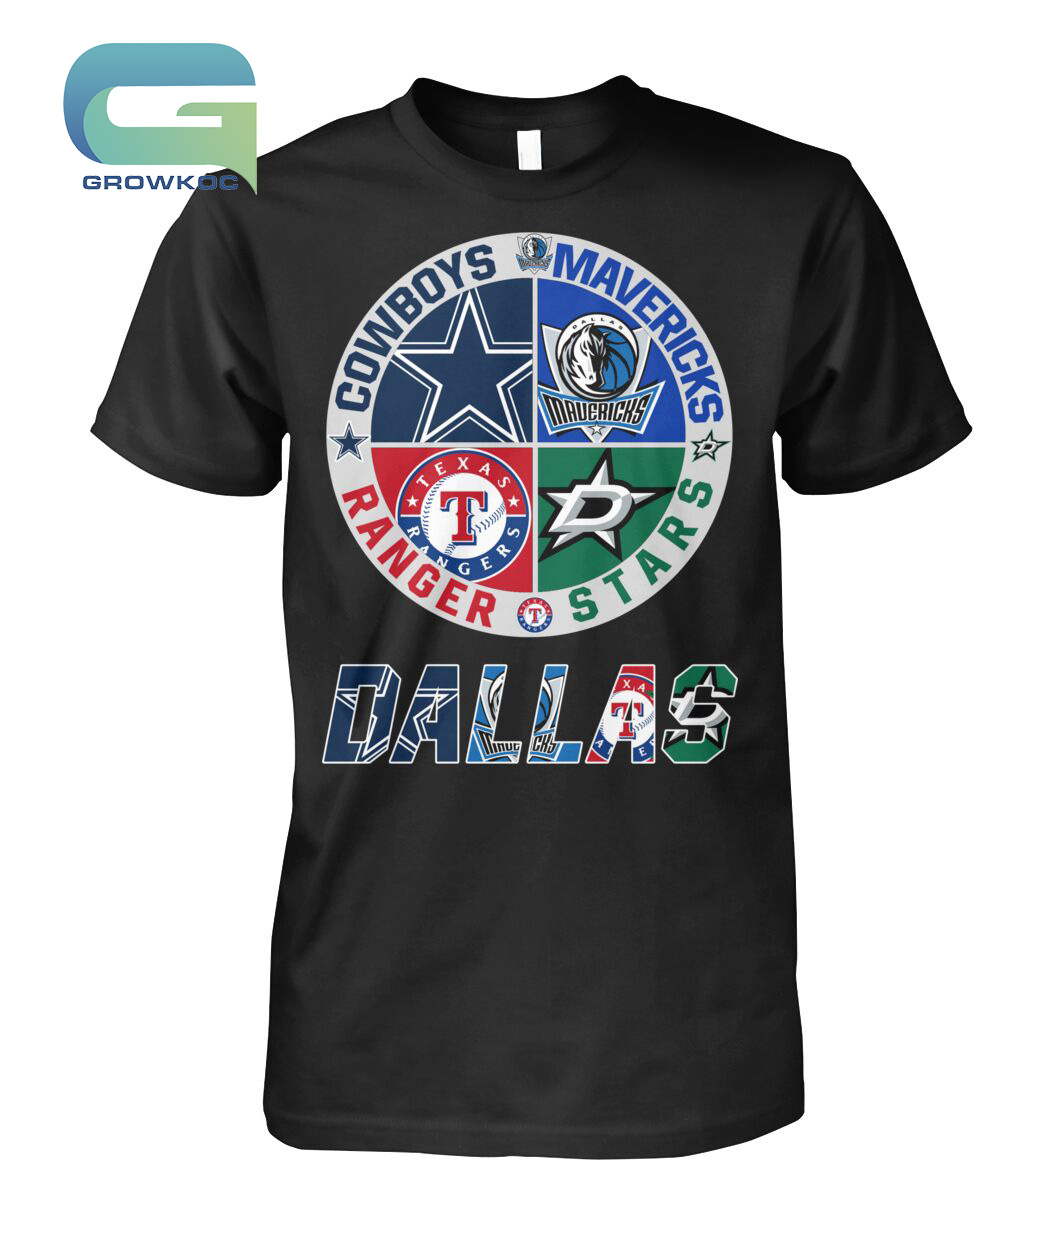 DALLAS Dallas FC Dallas Mavericks Dallas Cowboys Dallas Stars Texas Rangers  shirt